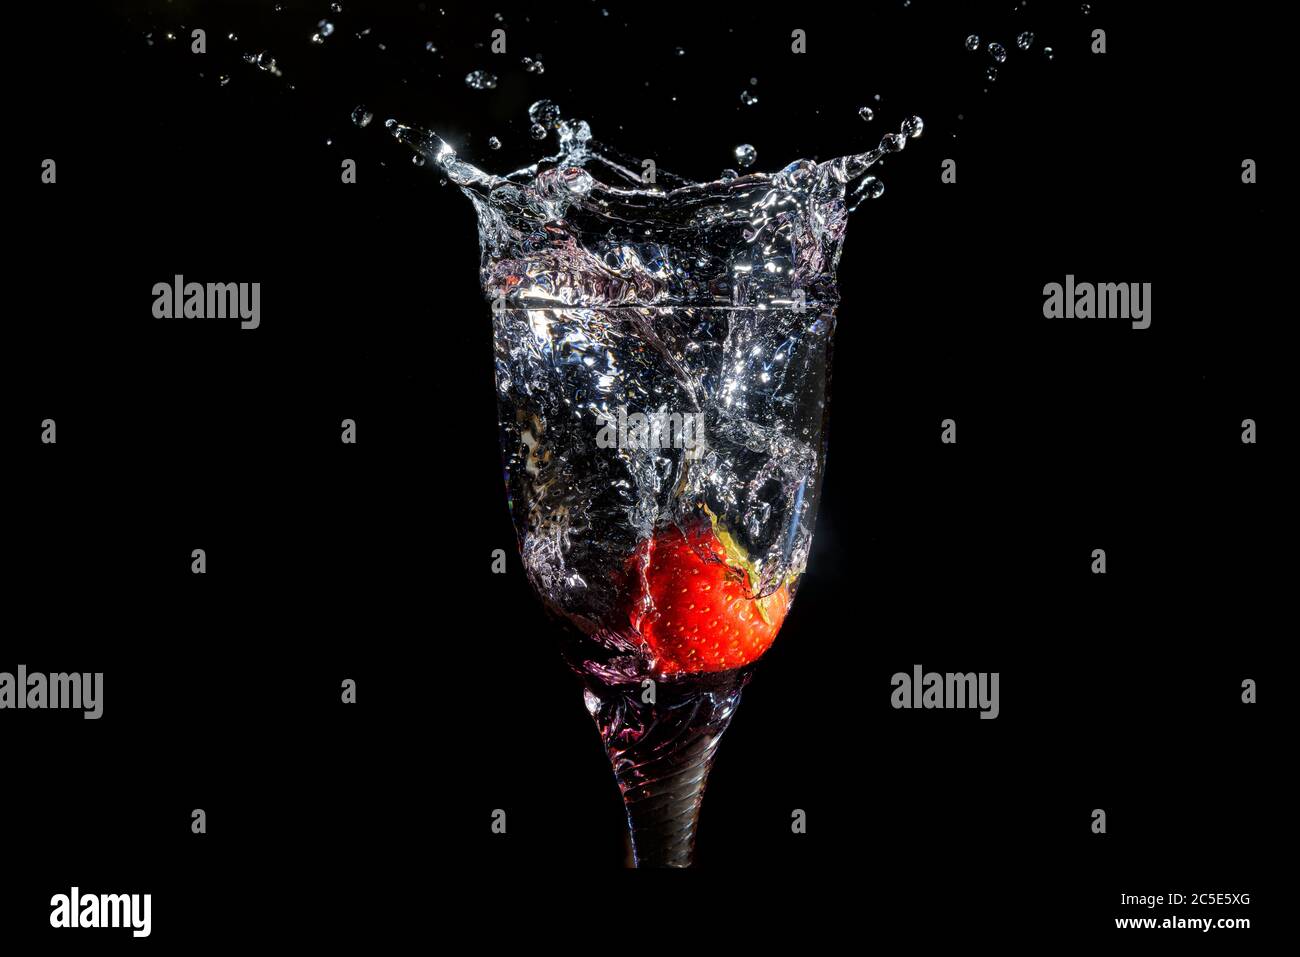 Strawberry splashing into glass on a black backround Stock Photo